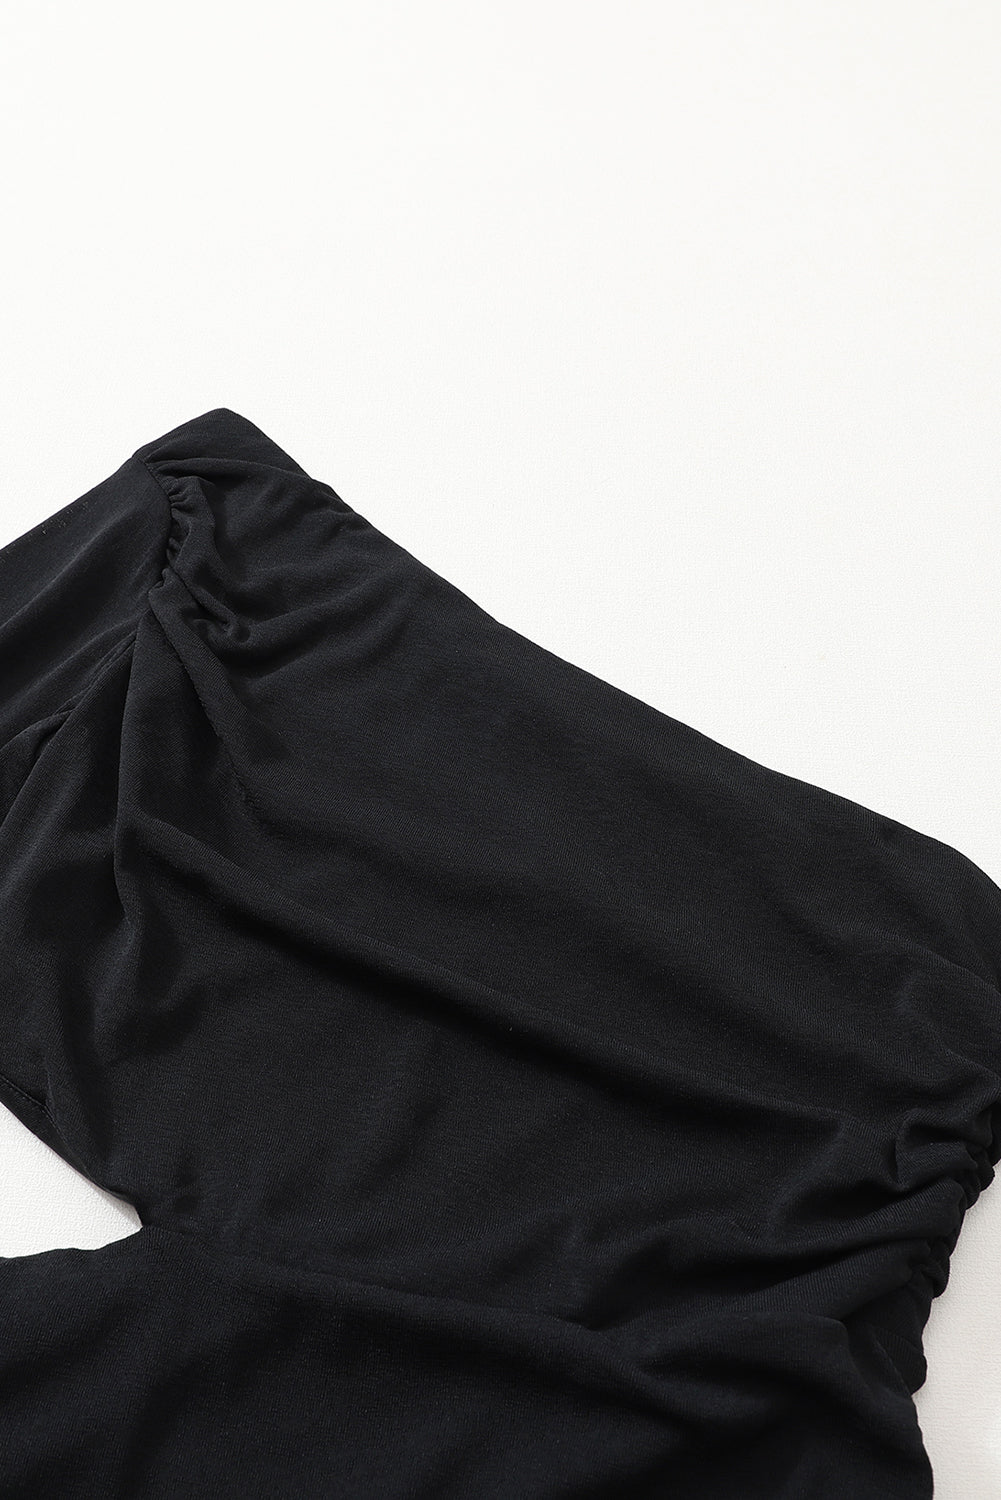 Black Asymmetric One Shoulder Cutout Bodycon Dress Bodycon Dresses JT's Designer Fashion